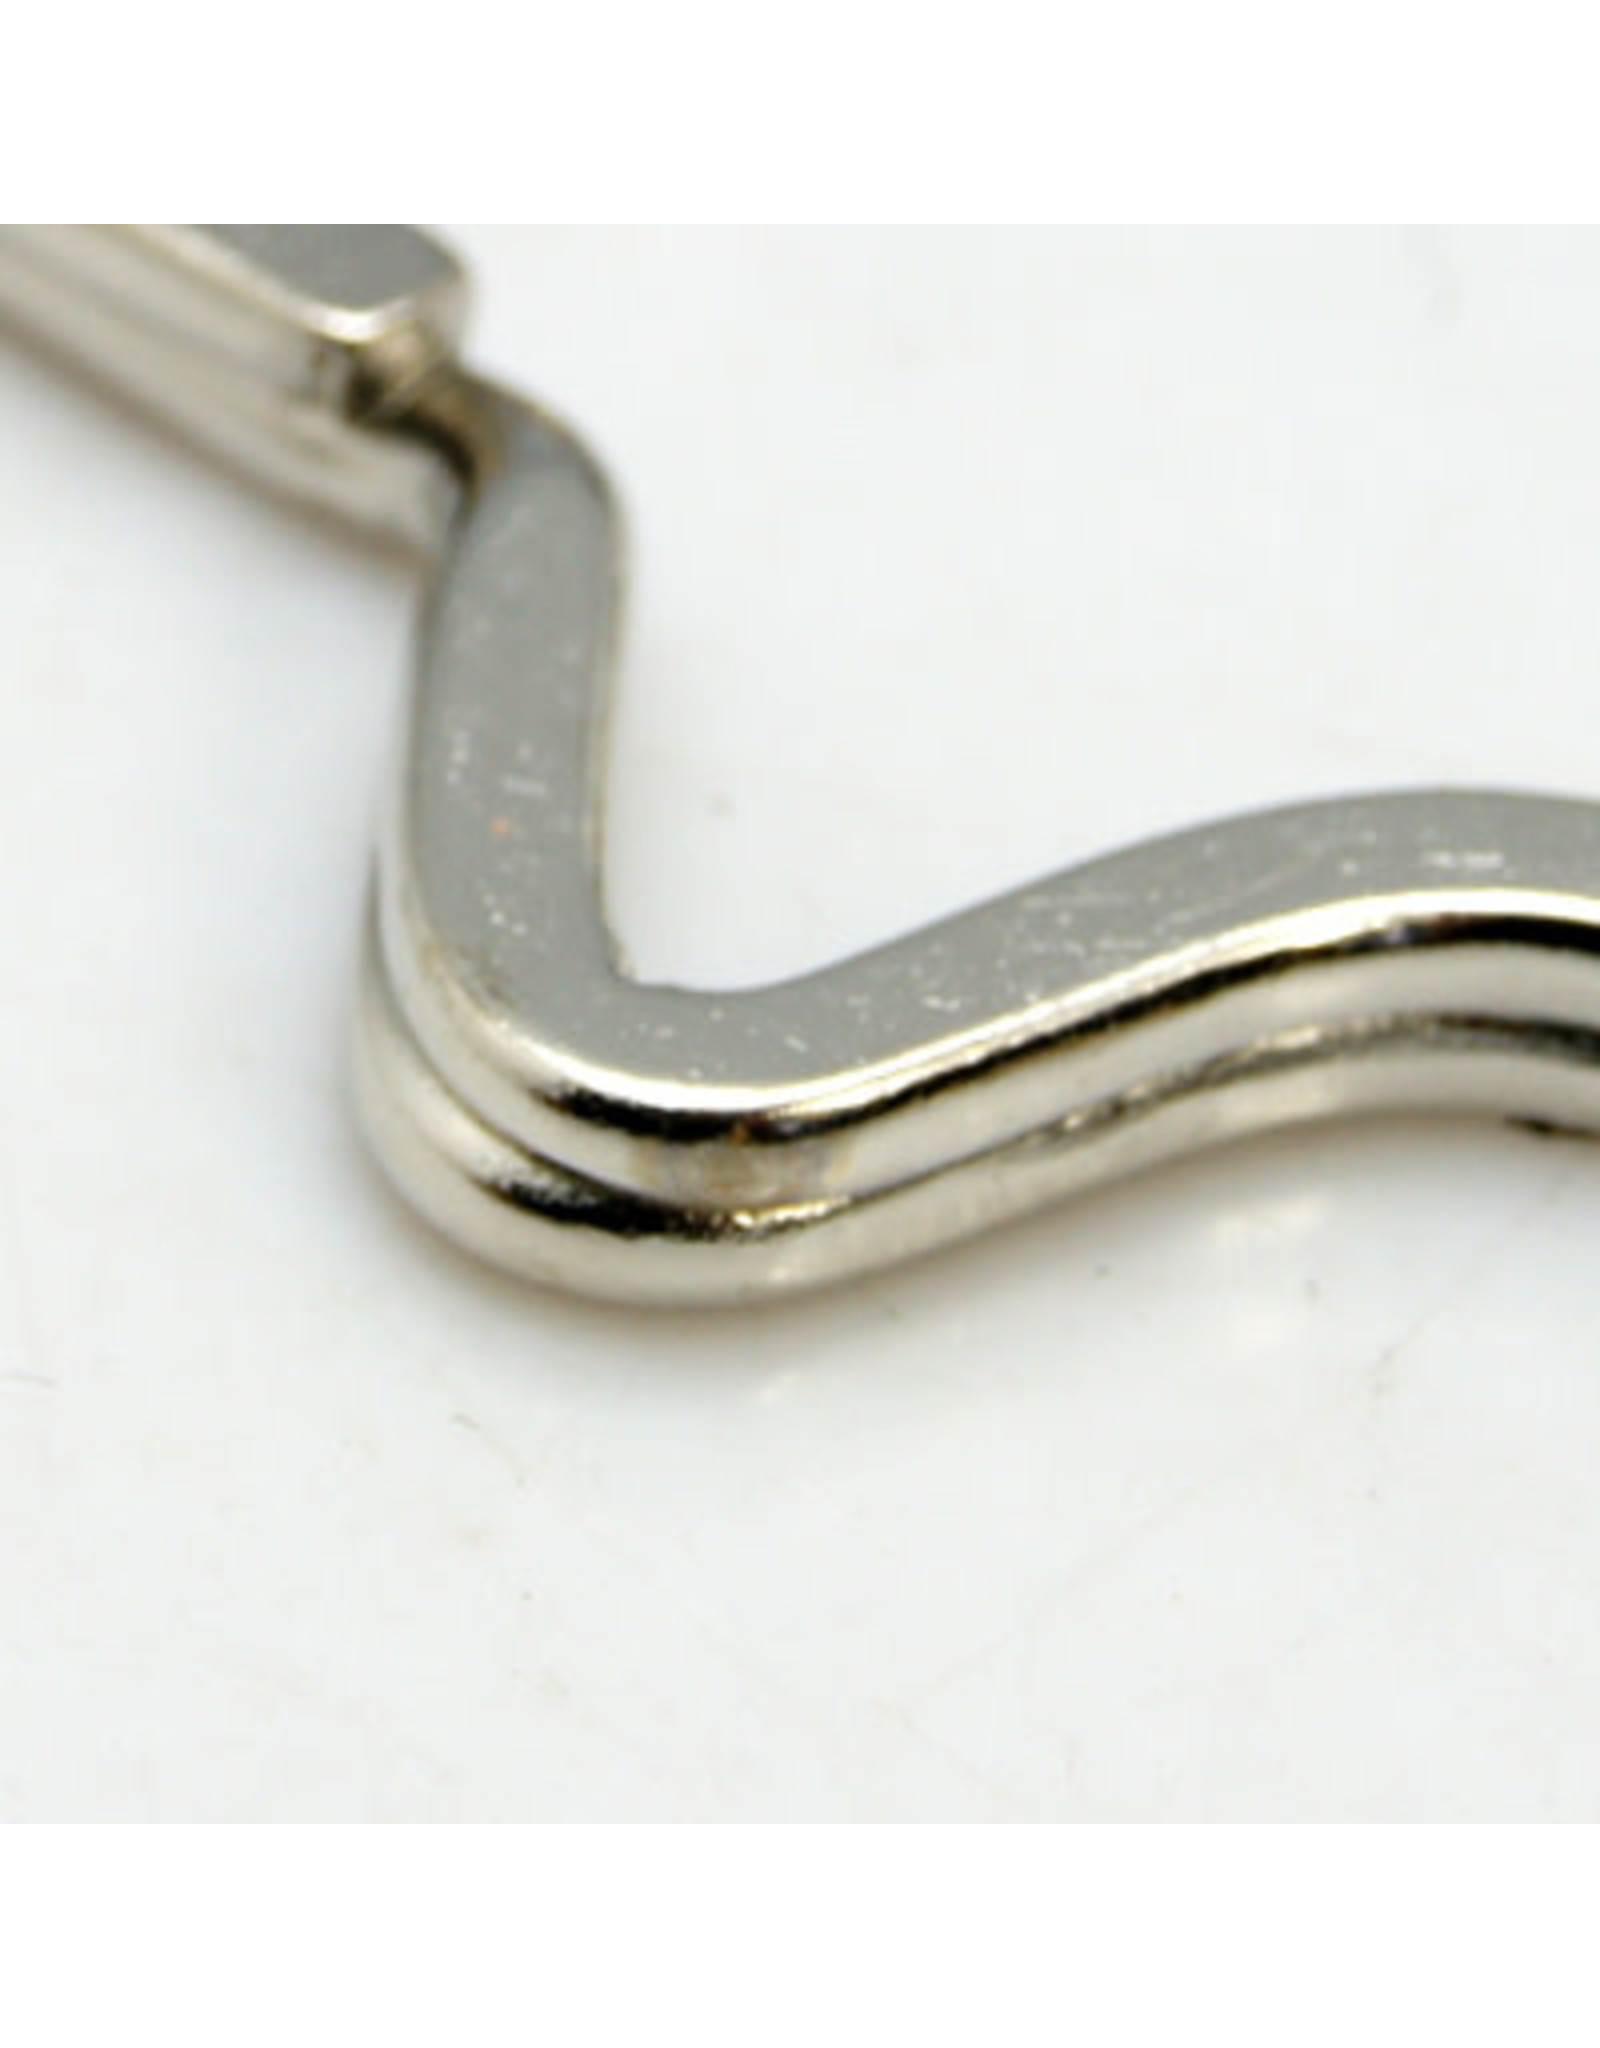 Split Ring Assorted Shape and Size Nickel  x5 Key Ring Random Mix